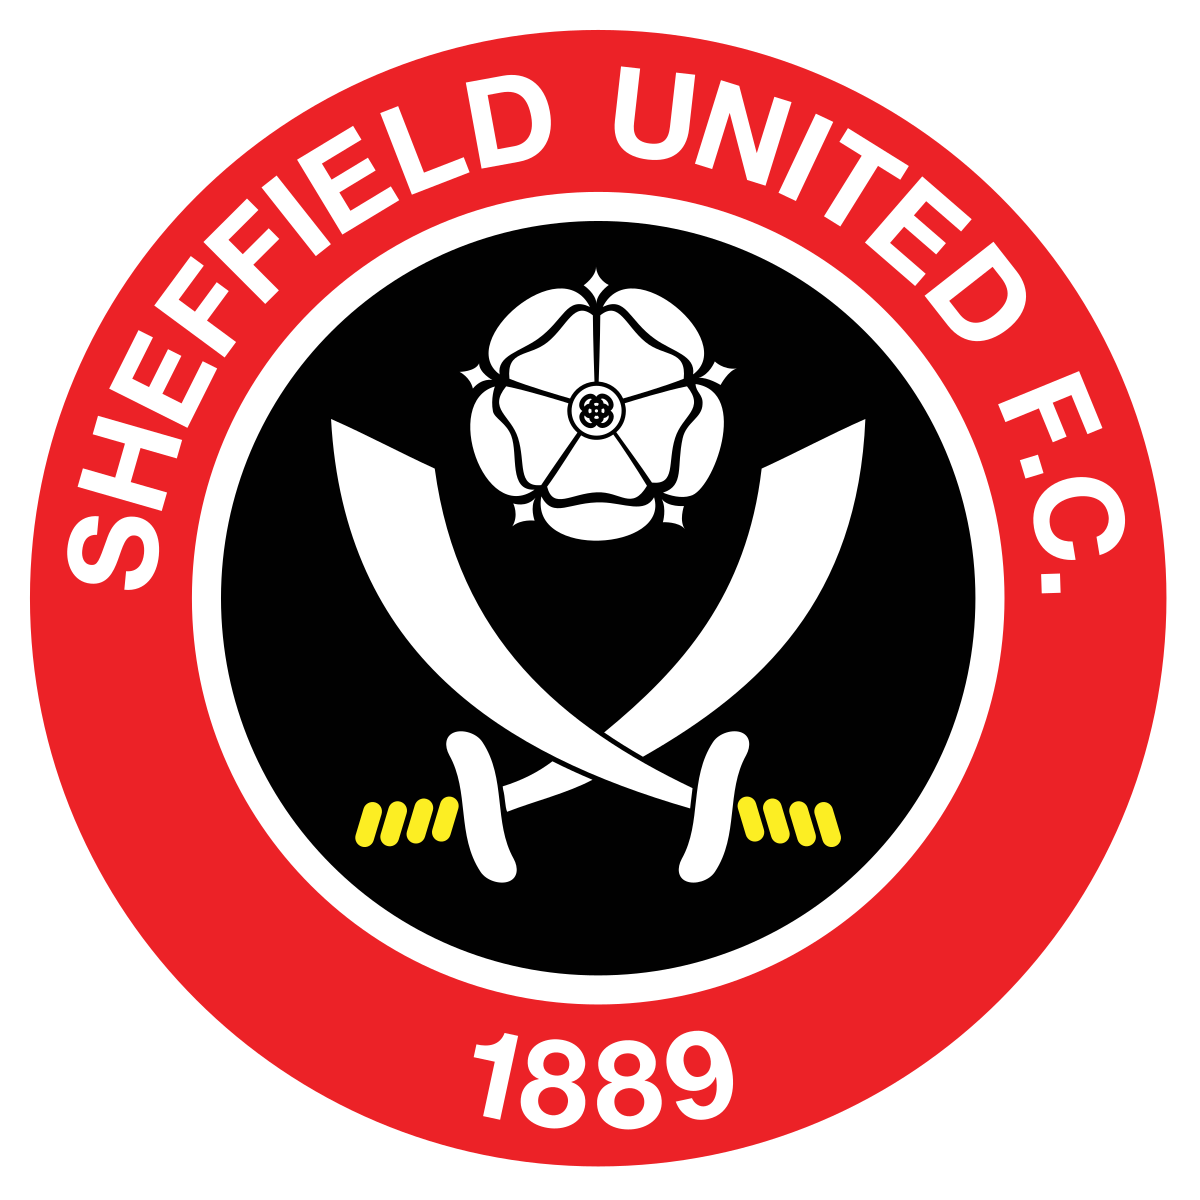 Sheffield_United_FC_logo.svg.png